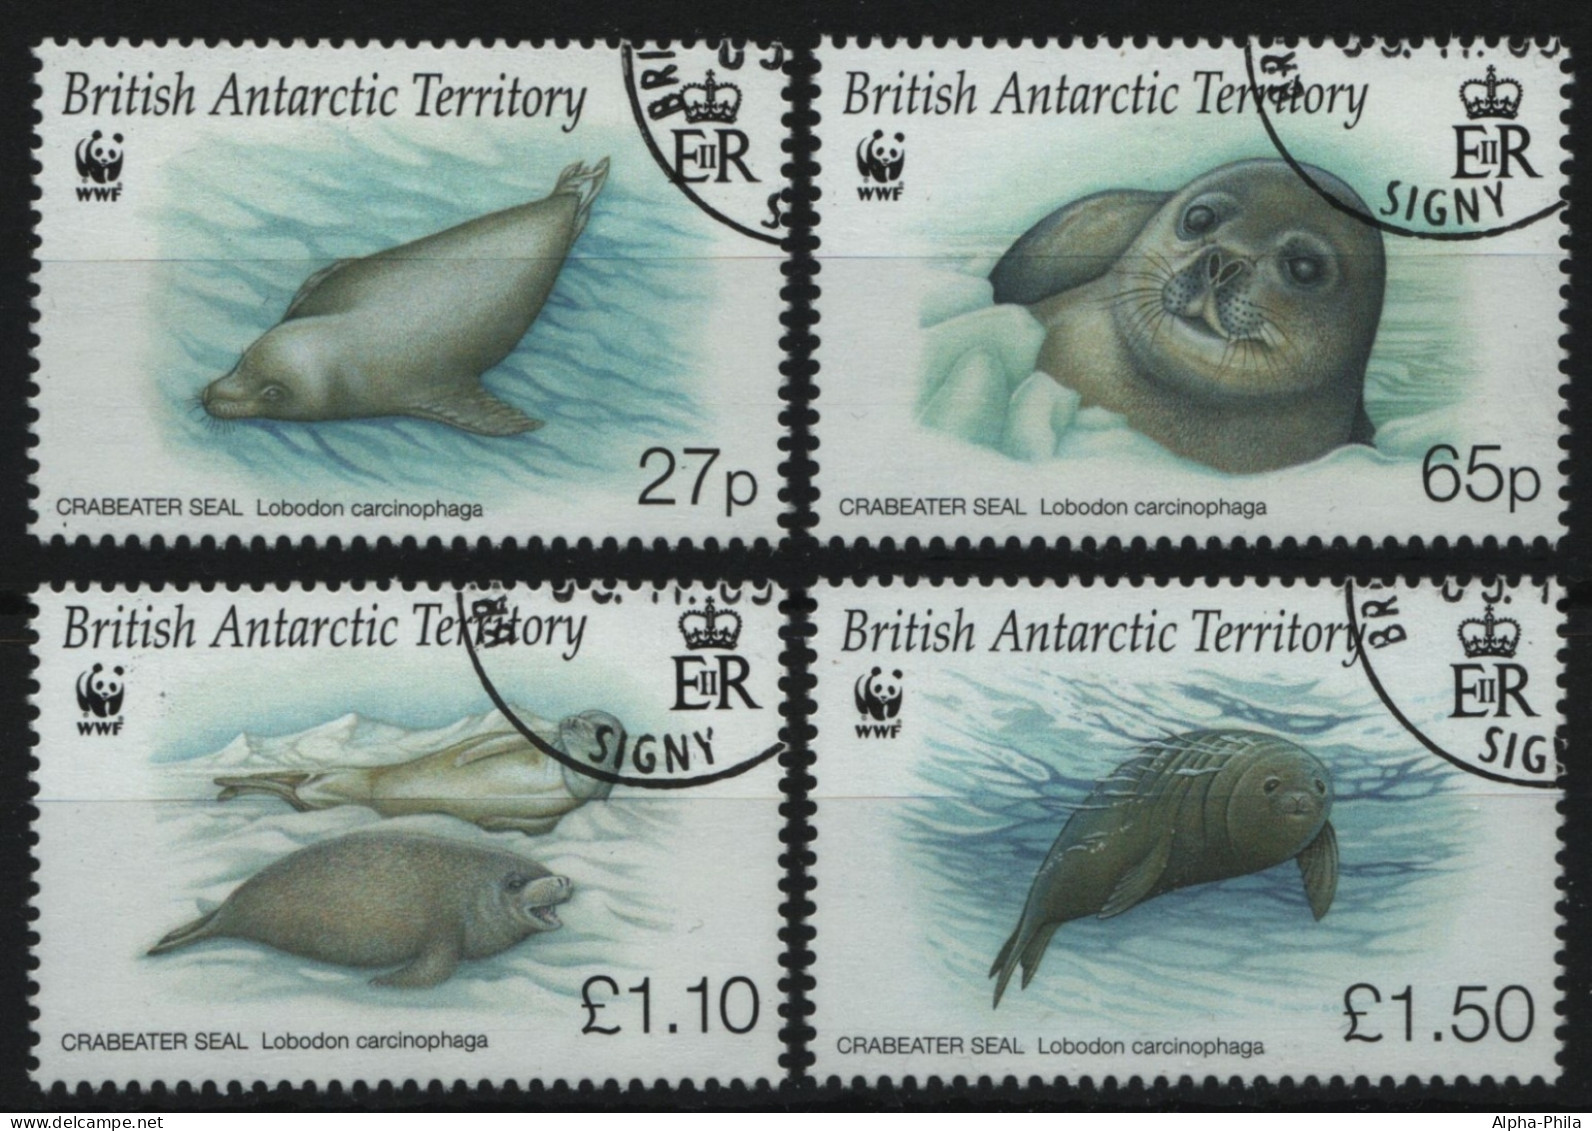 BAT / Brit. Antarktis 2009 - Mi-Nr. 505-508 Gest / Used - Robben / Seals - Oblitérés